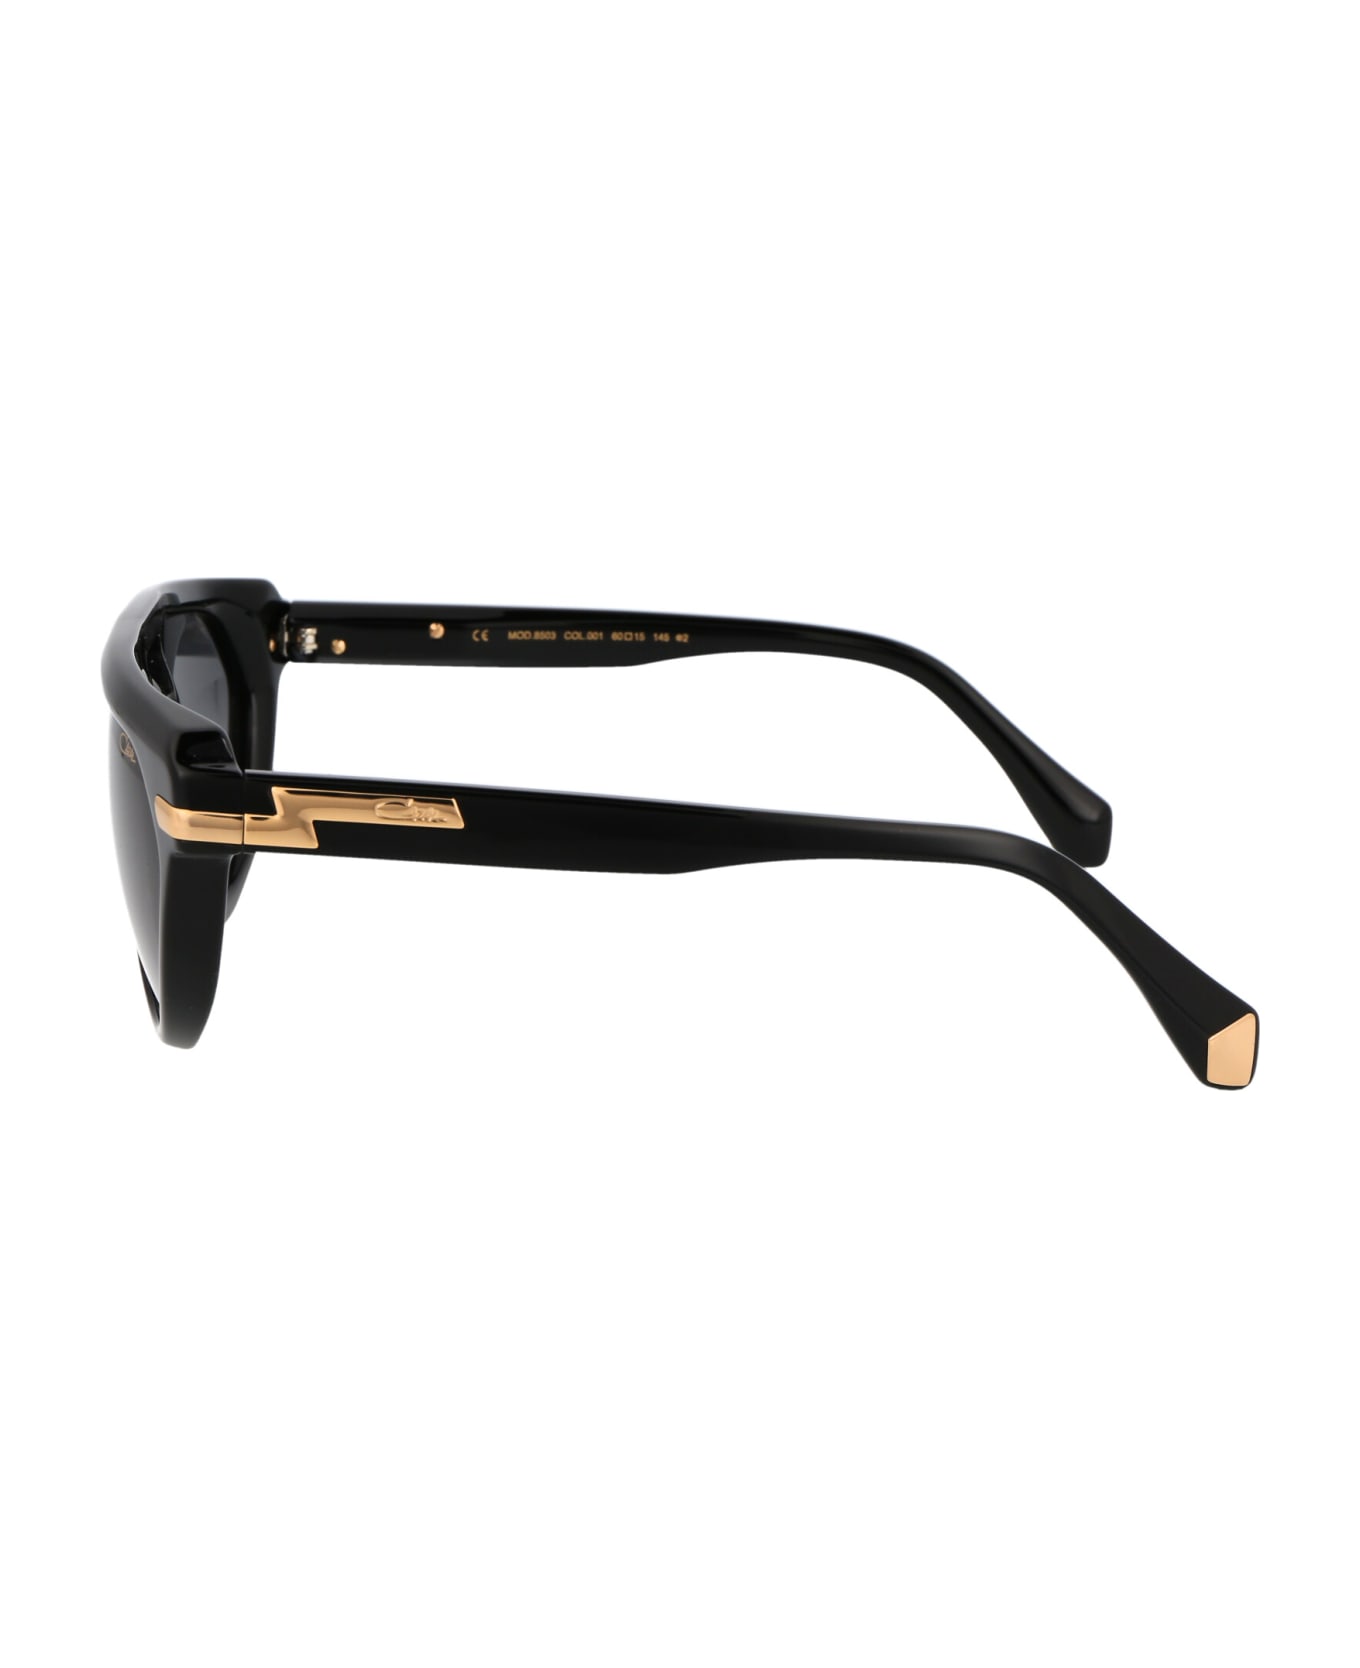 Cazal Mod. 8503 Sunglasses - 001 BLACK